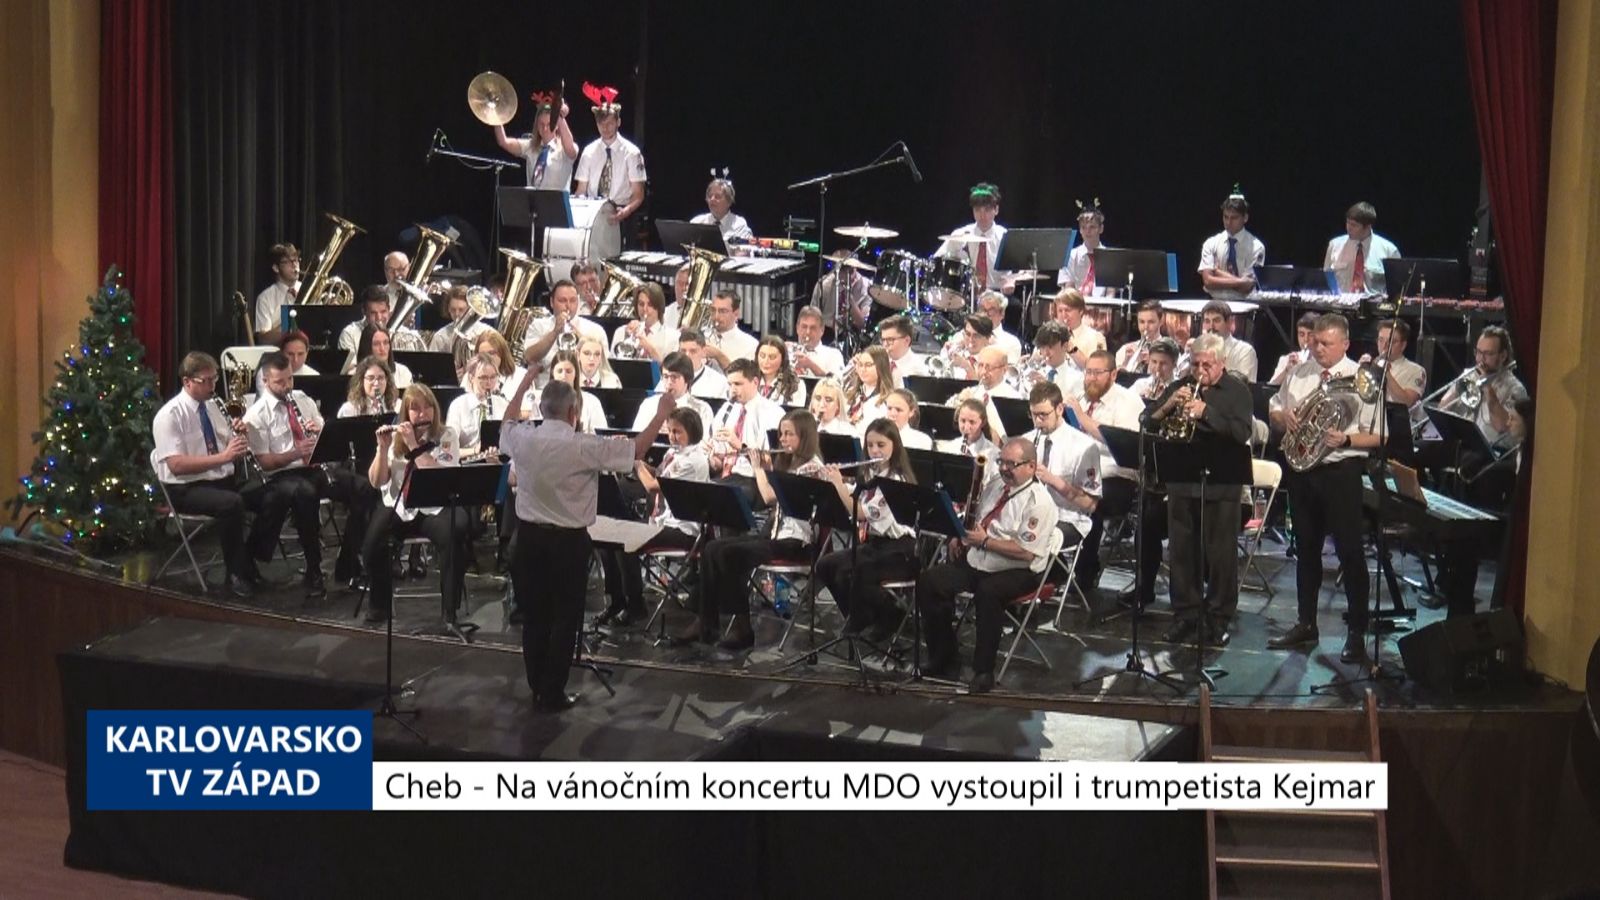 Cheb: Na vánočním koncertu MDO vystoupil i trumpetista Kejmar (TV Západ)